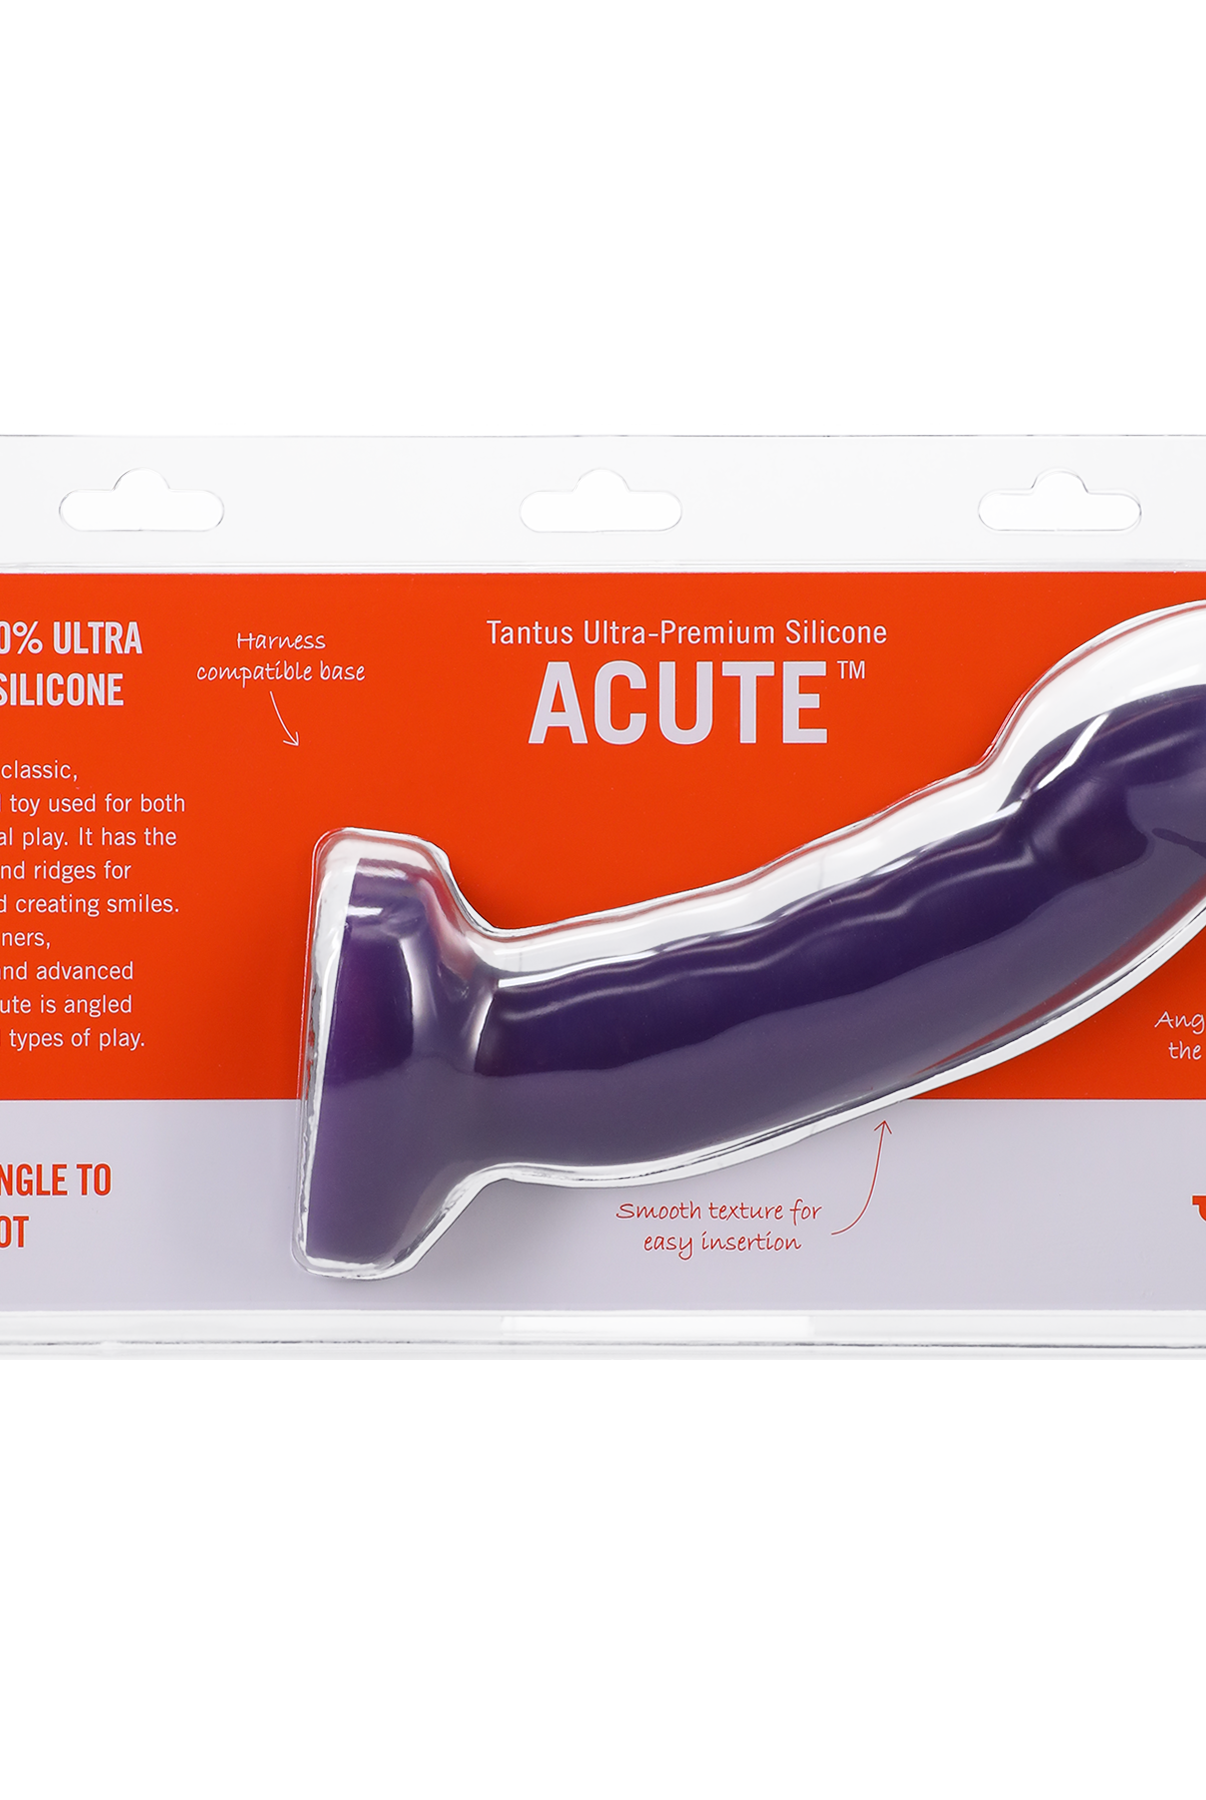 Acute Lavender Medium - ACME Pleasure